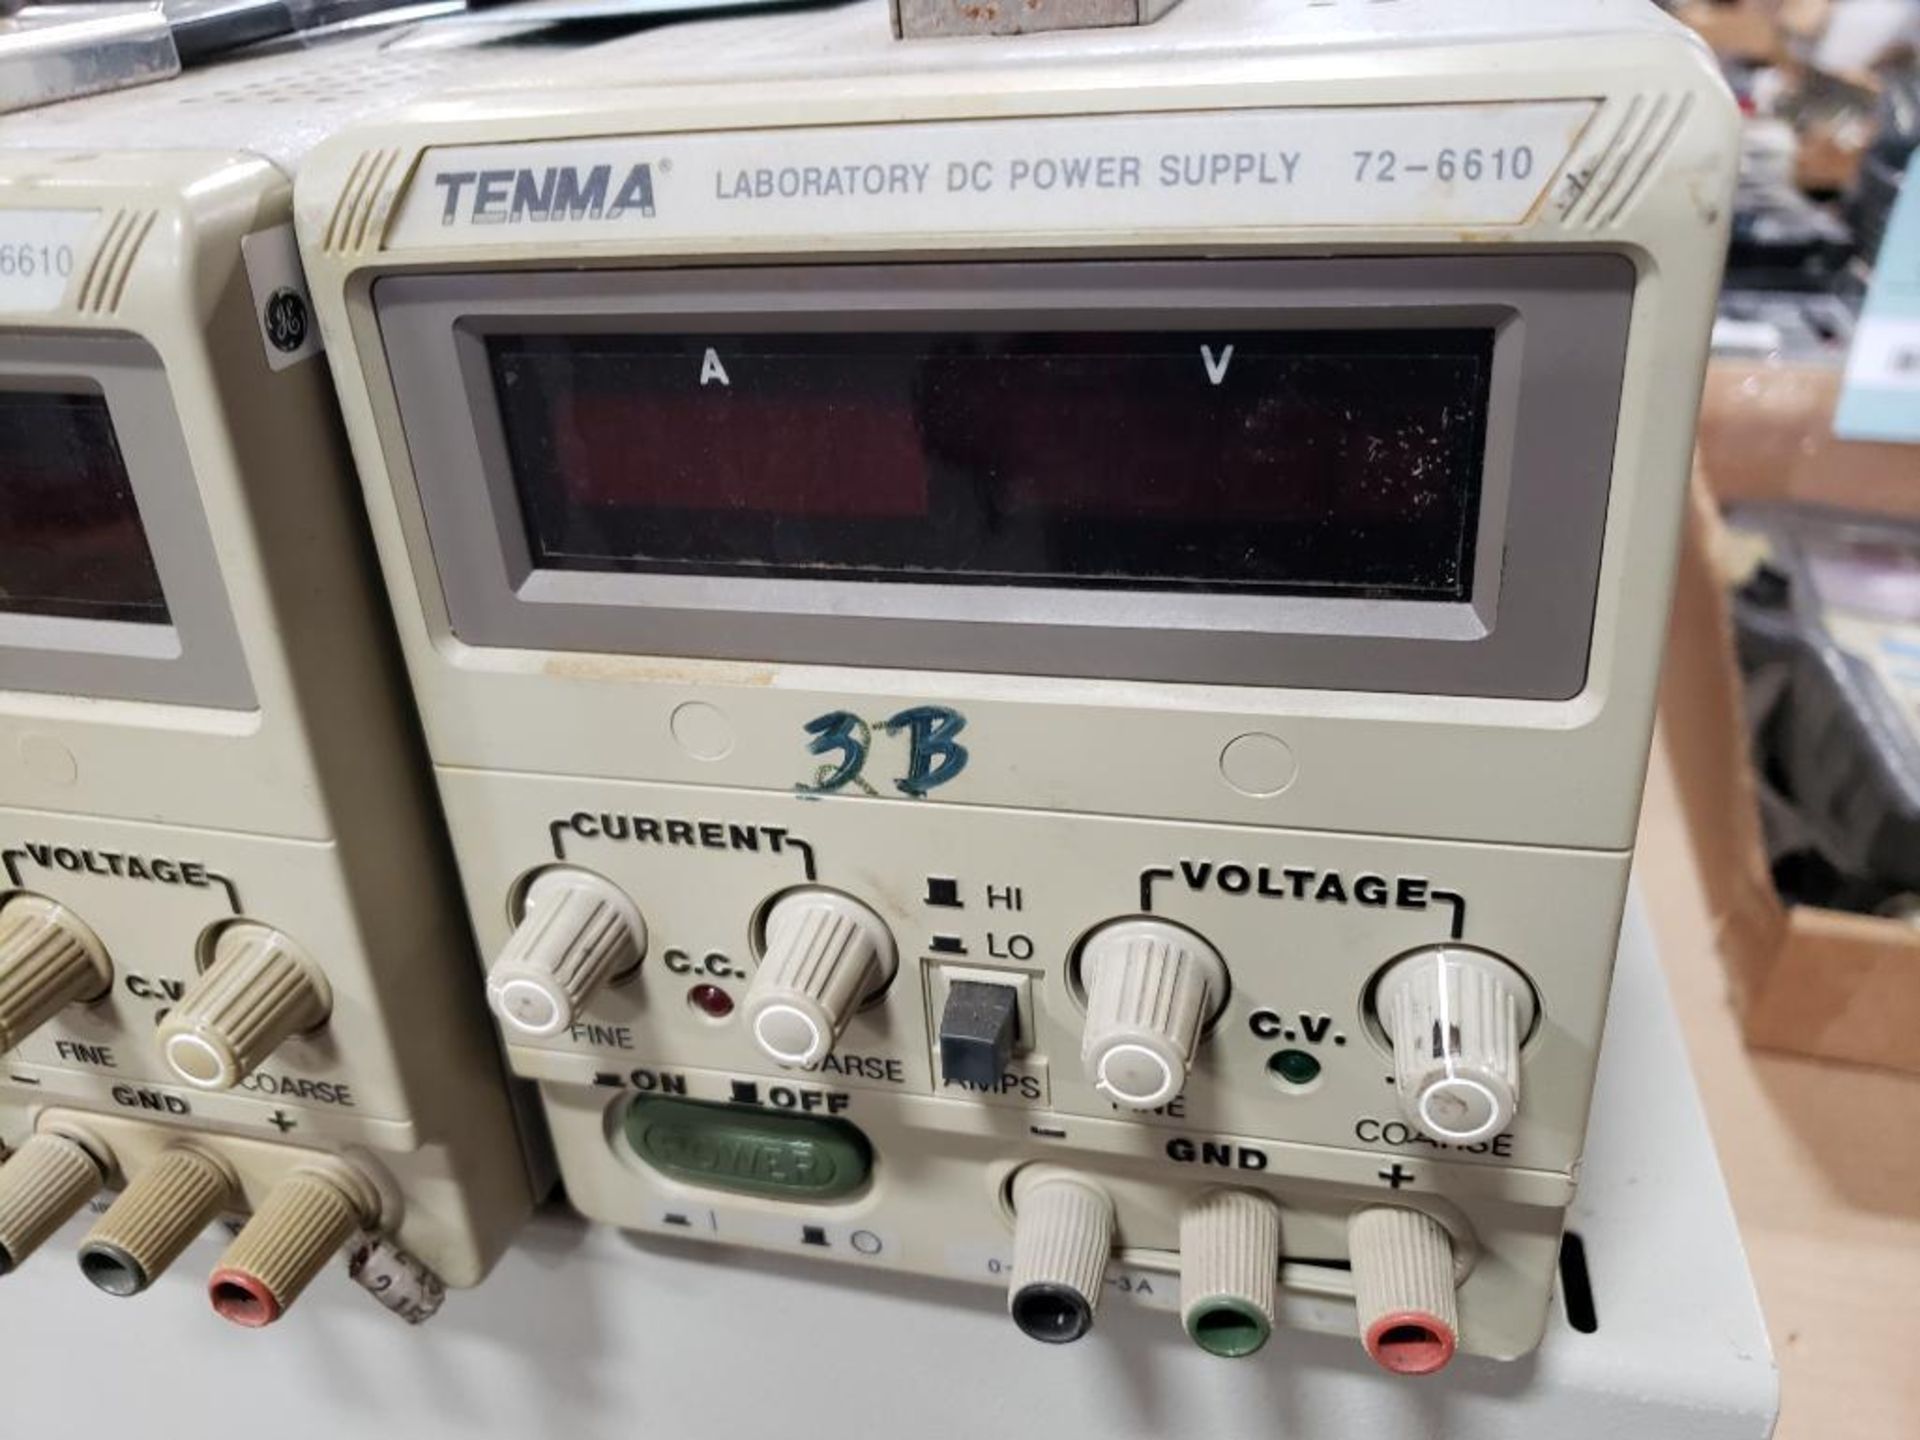 Qty 2 - Tenma 72-6610 Laboratory DC Power supply. - Image 2 of 6